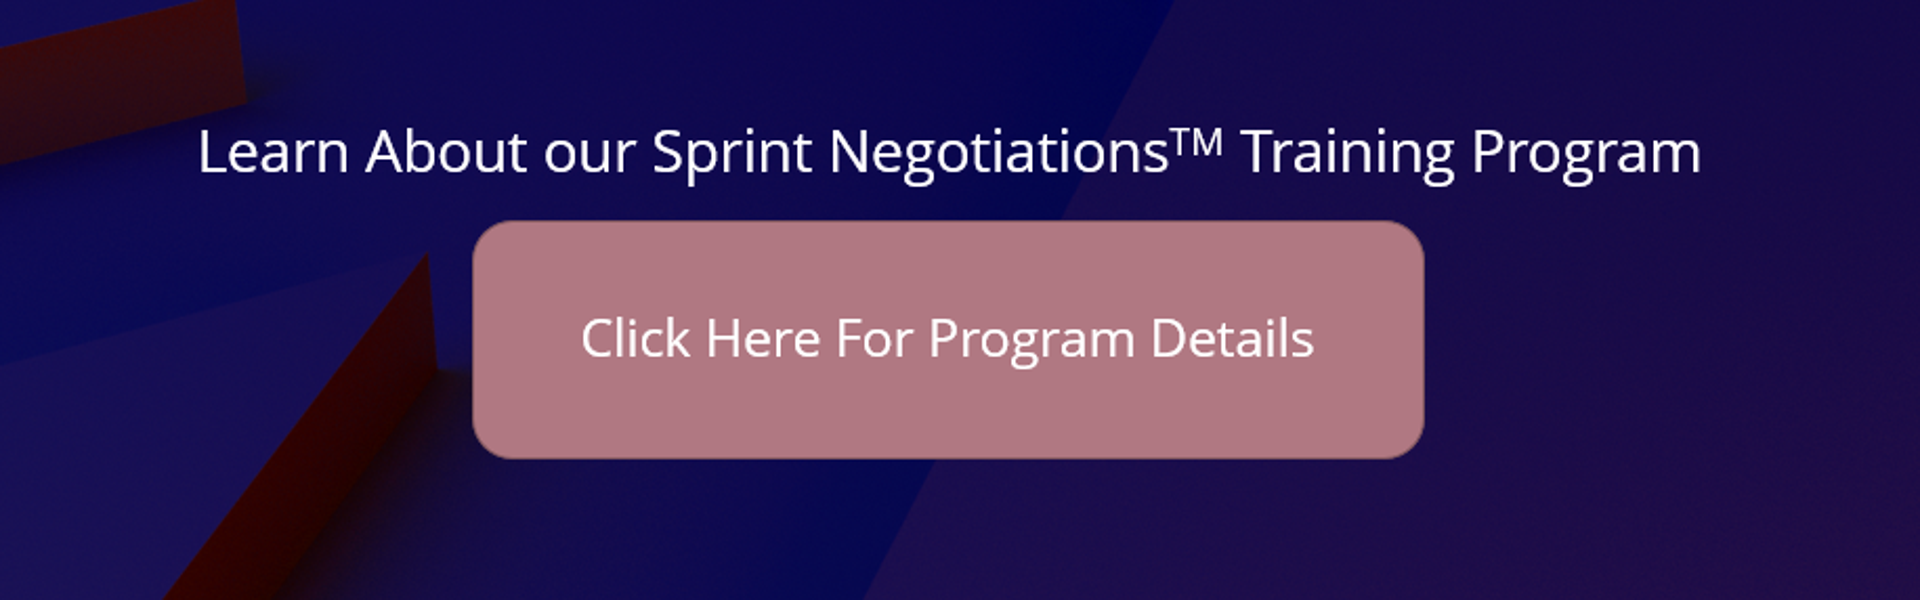 sales negotiations capabilities program